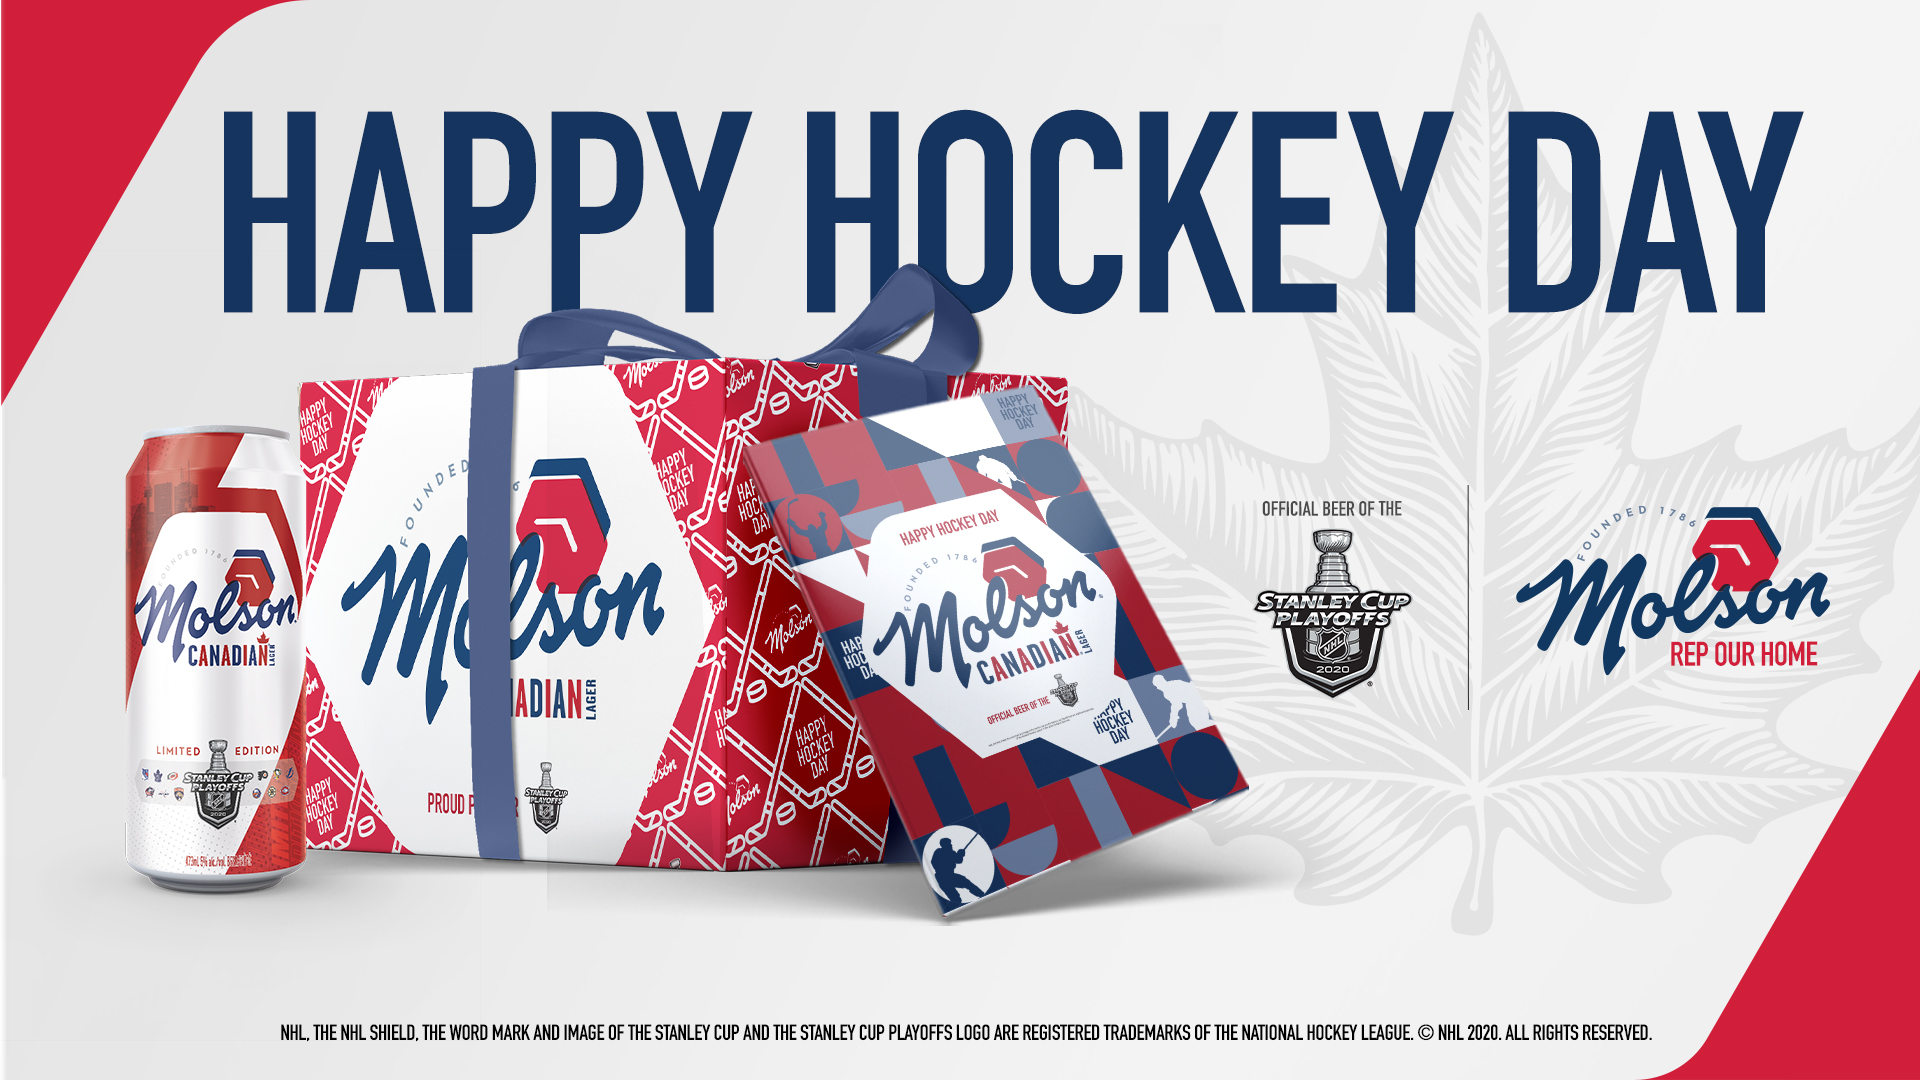 Rejoice, Canada Molson Canadian wishes you a Happy Hockey Day